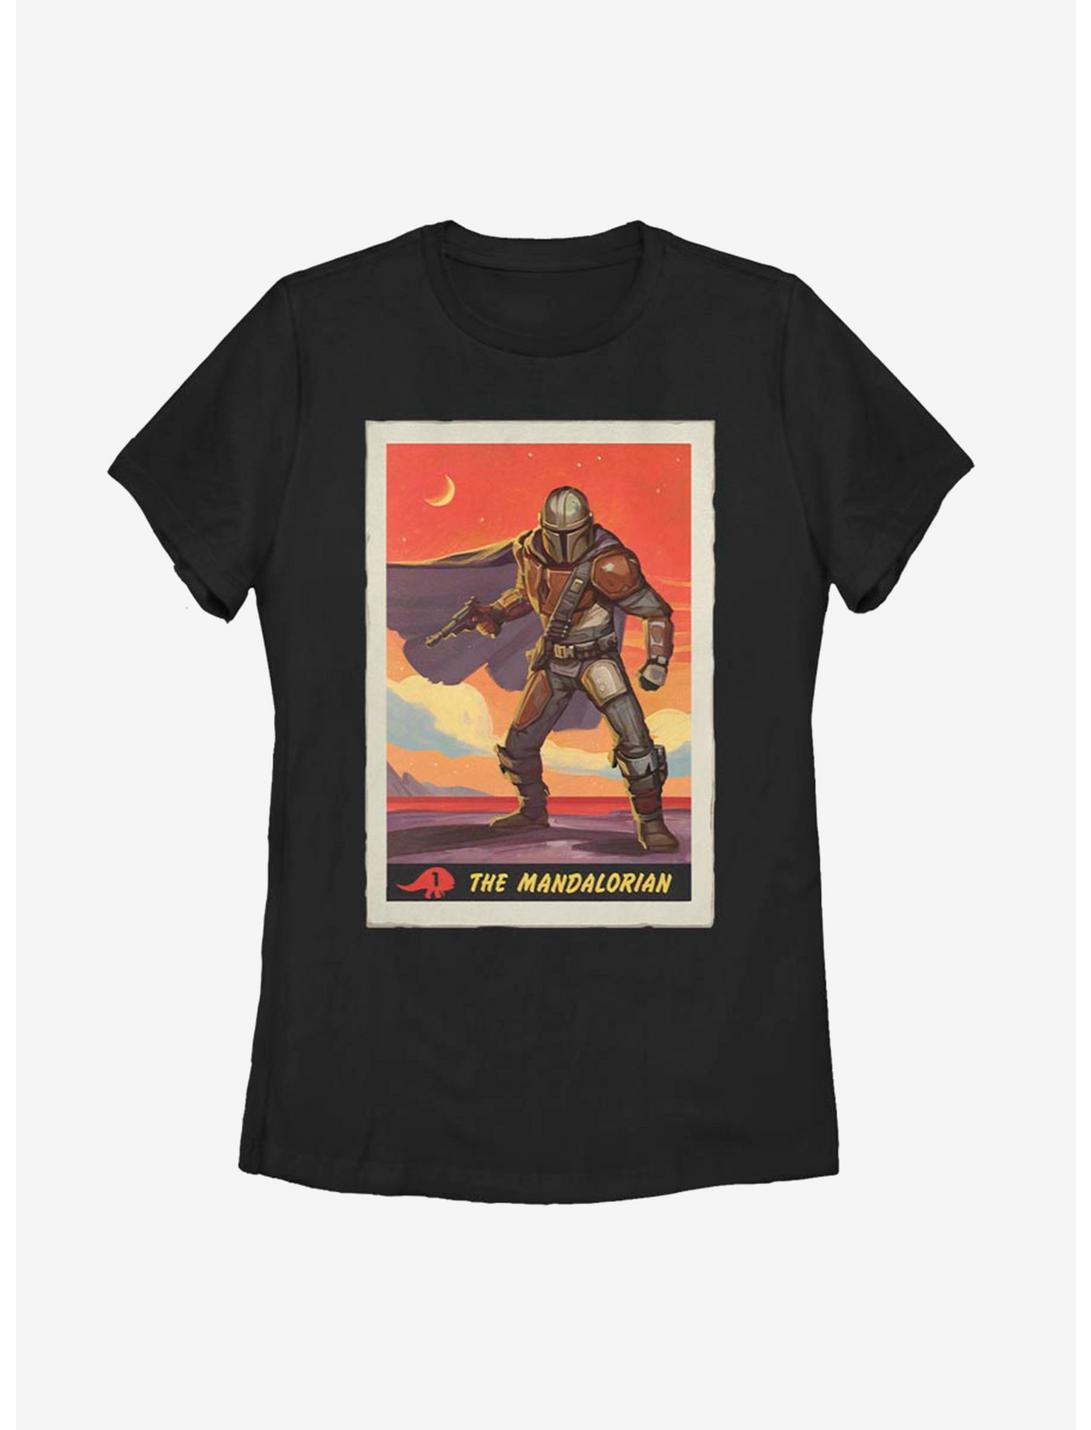 Plus Size Star Wars The Mandalorian Retro Poster Womens T-Shirt, BLACK, hi-res